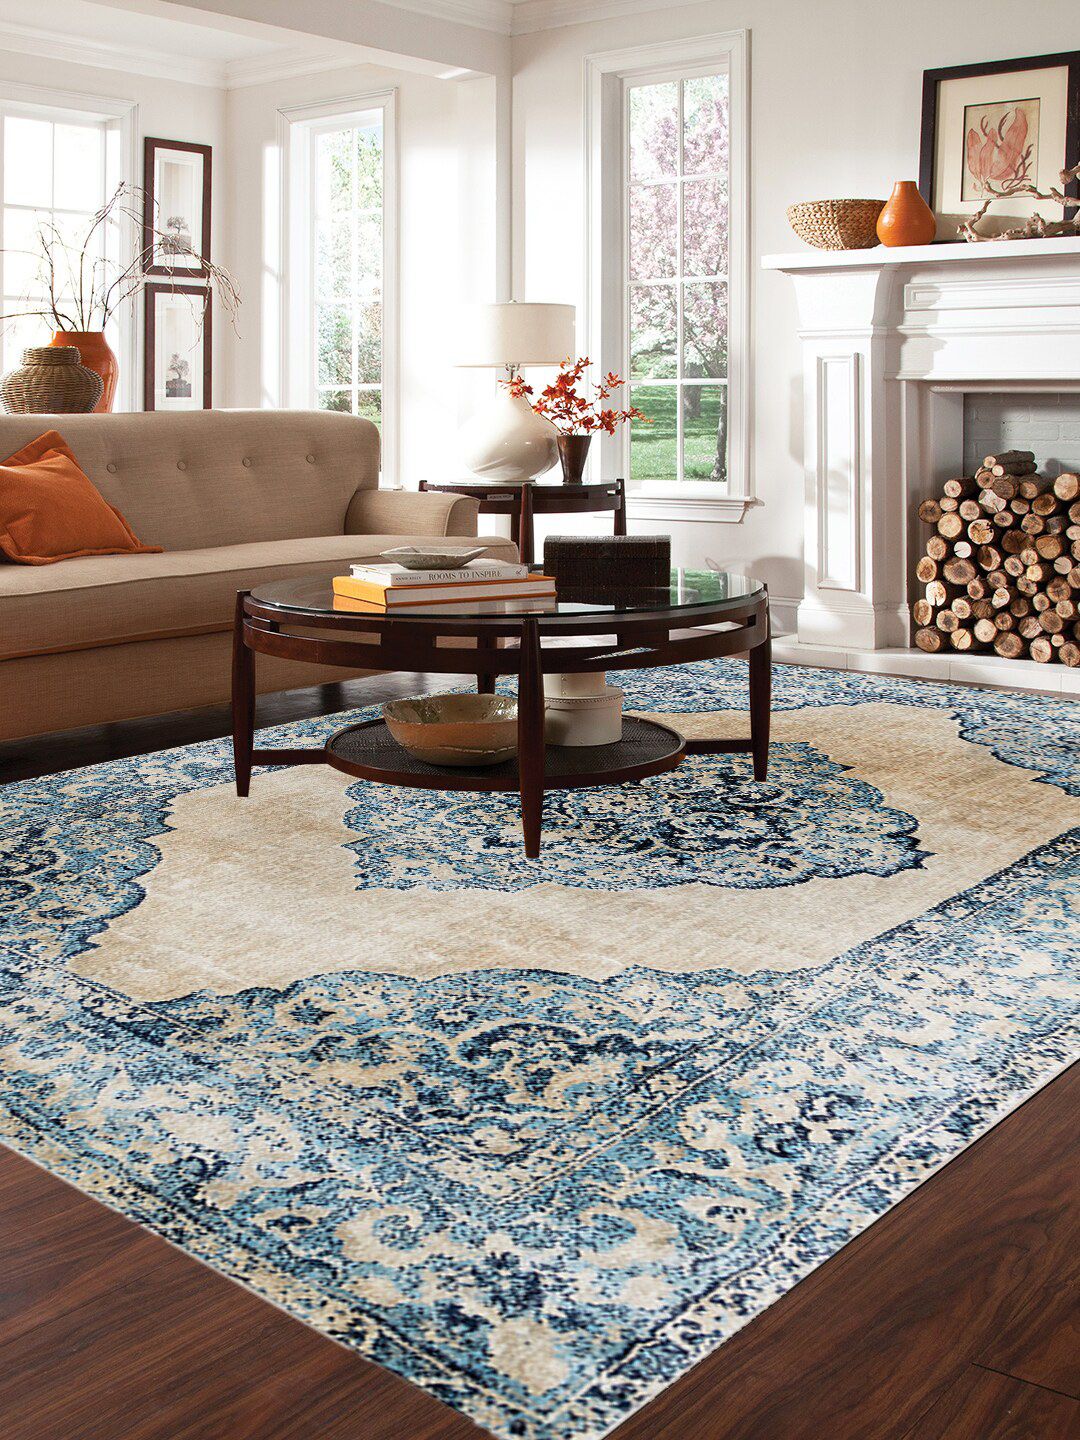 DDecor Blue & Beige Ethnic Motifs Printed Carpet Price in India